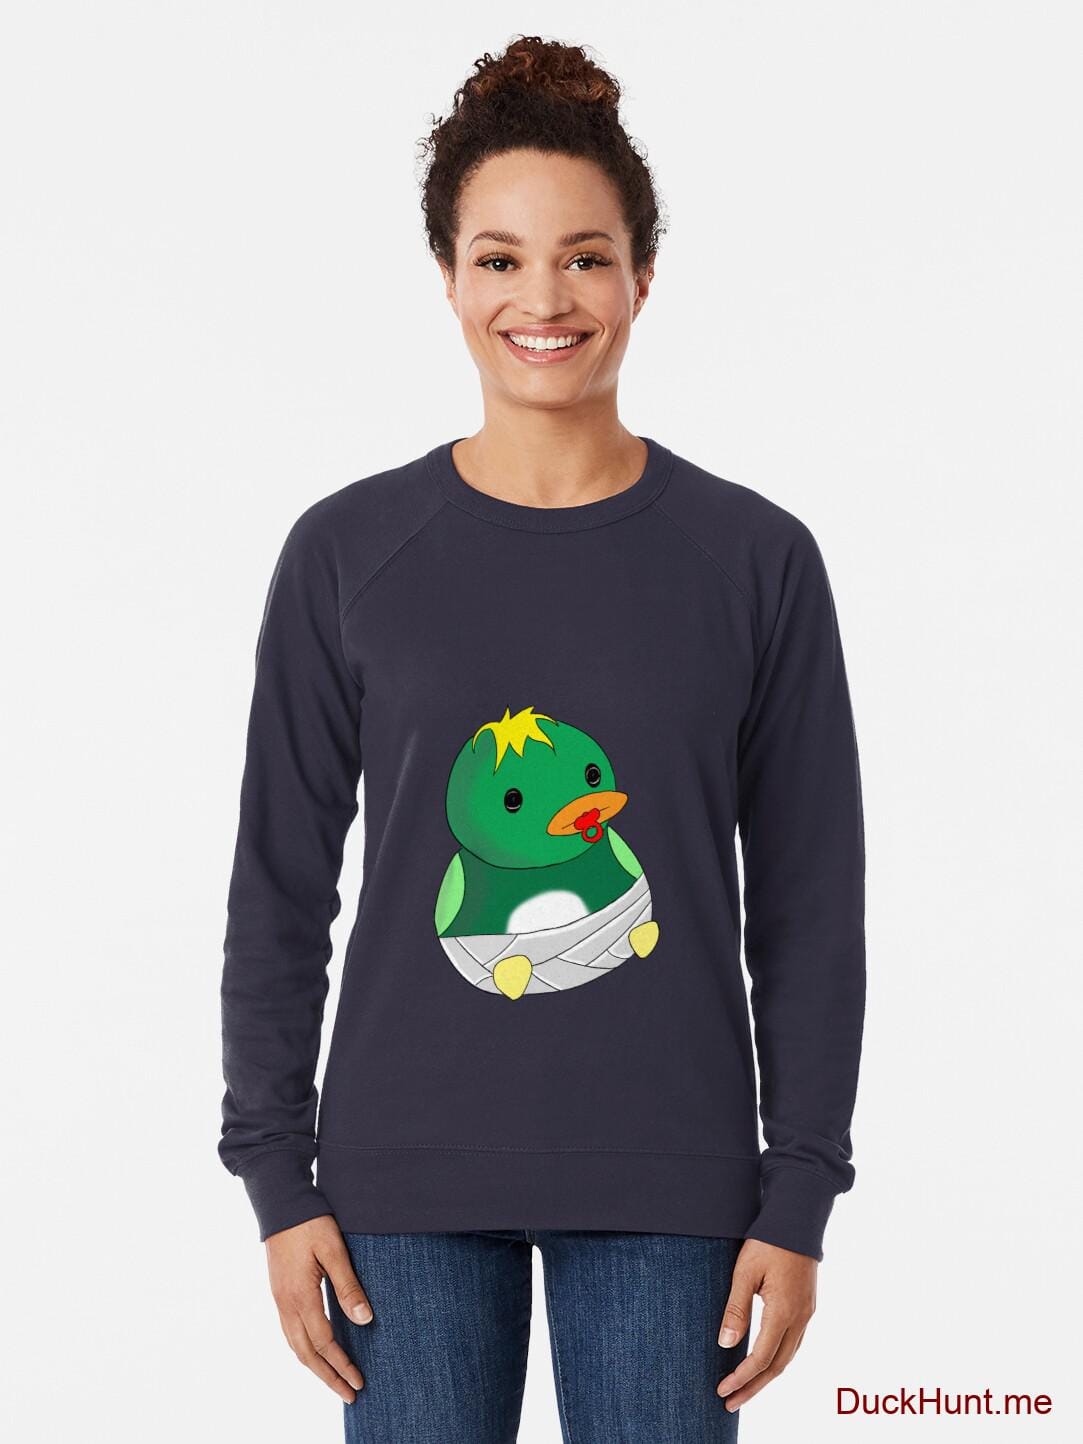 Baby duck Navy Lightweight Sweatshirt alternative image 1